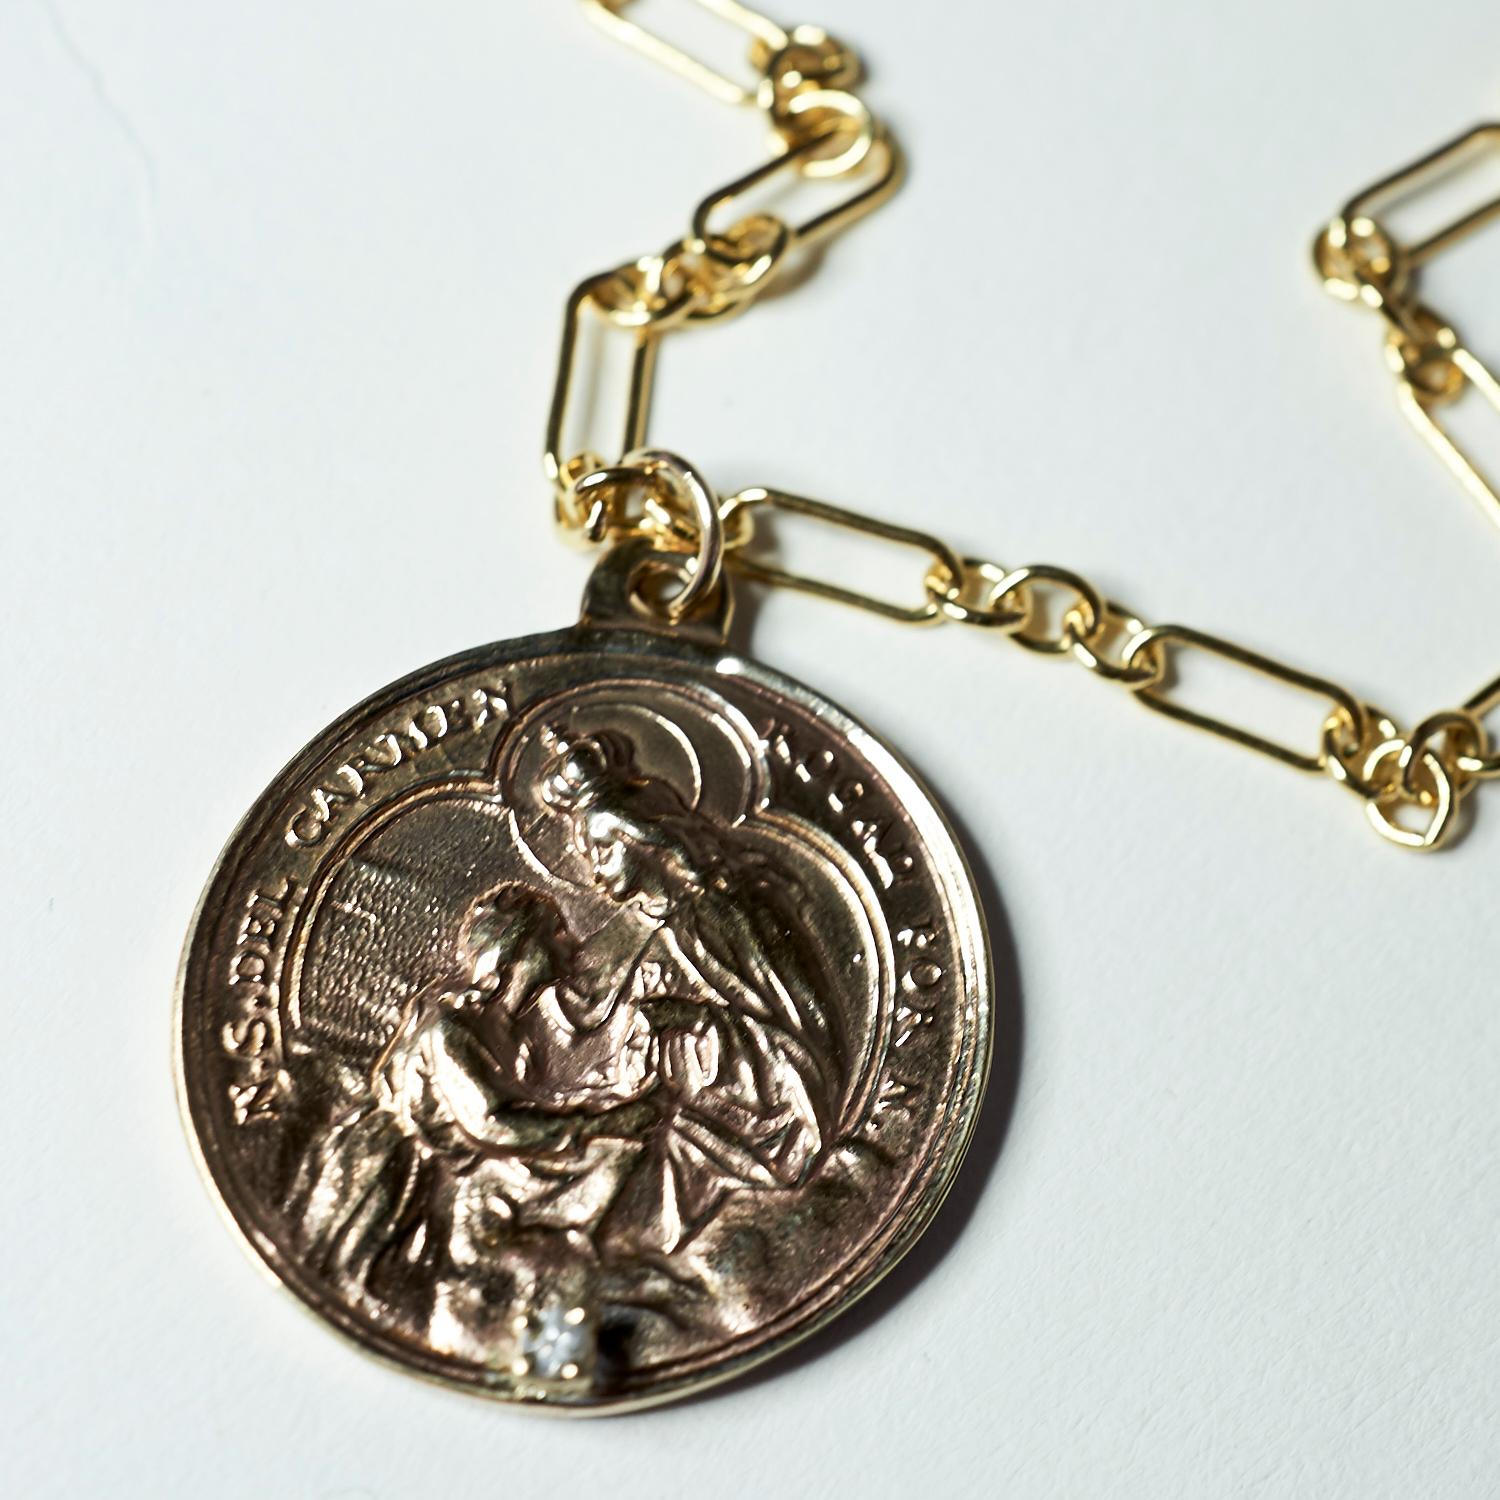 Brilliant Cut Diamond Virgin Mary Medal Coin Pendant Chain Necklace J Dauphin For Sale